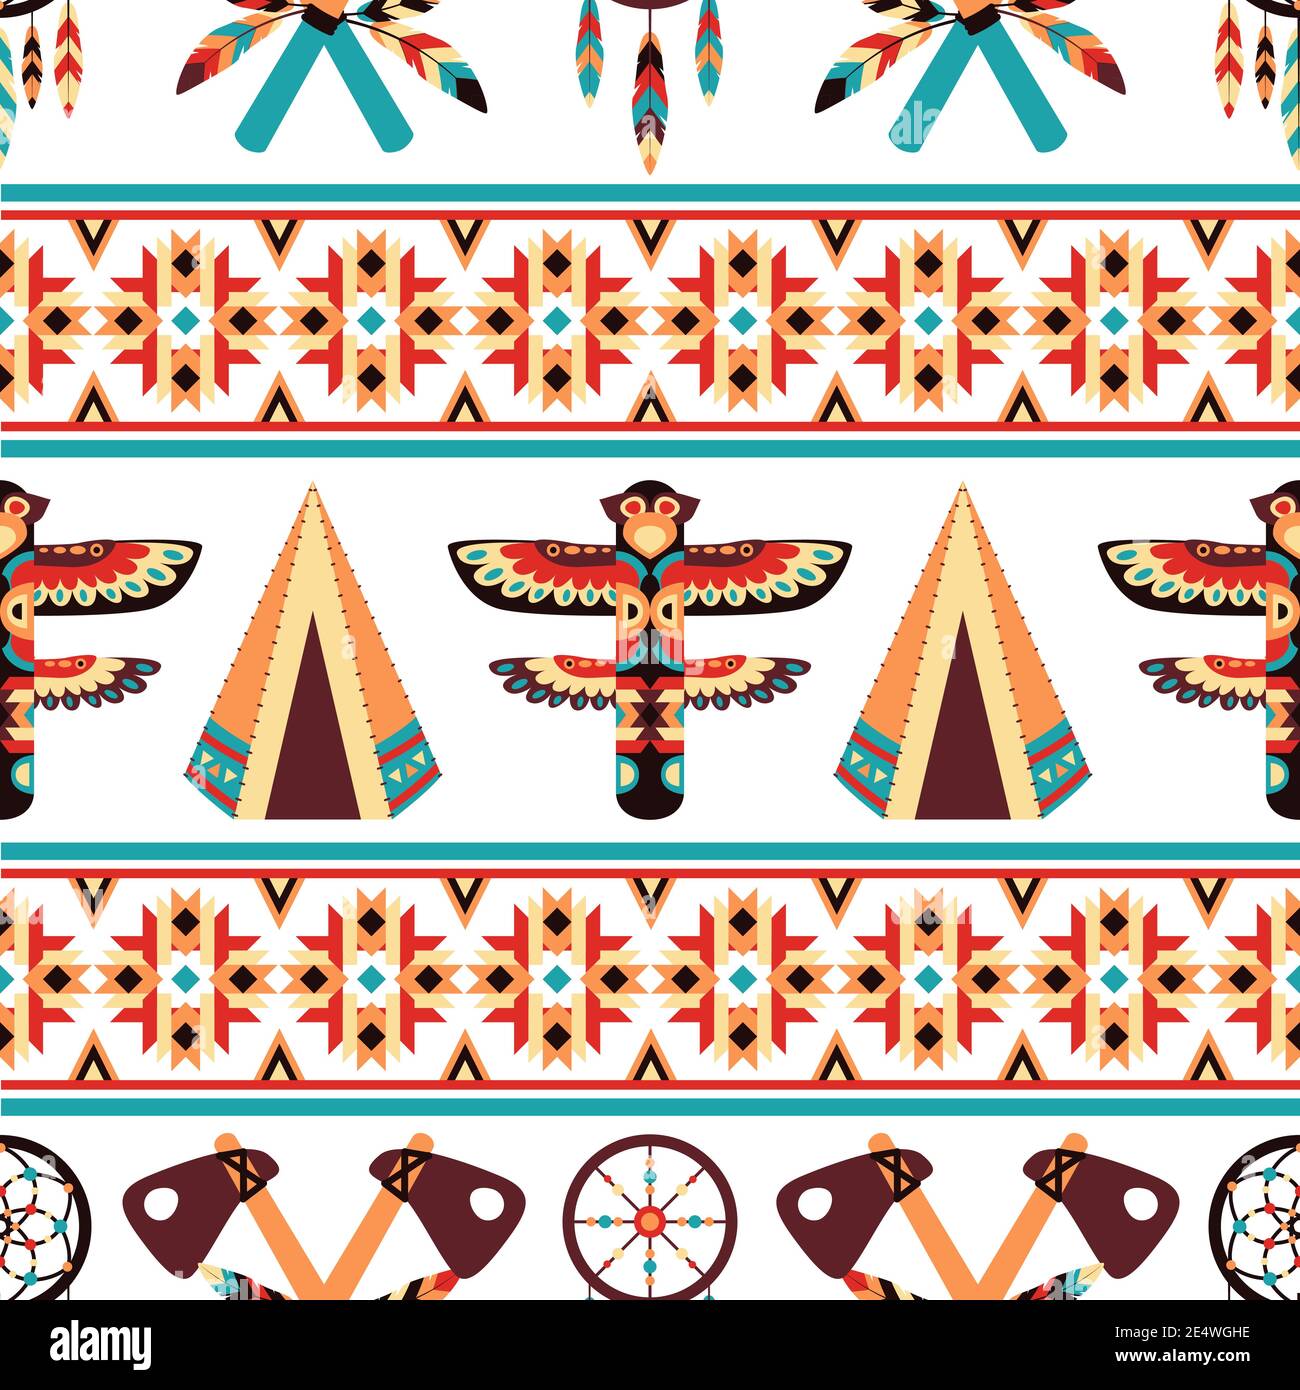 native american indian border designs